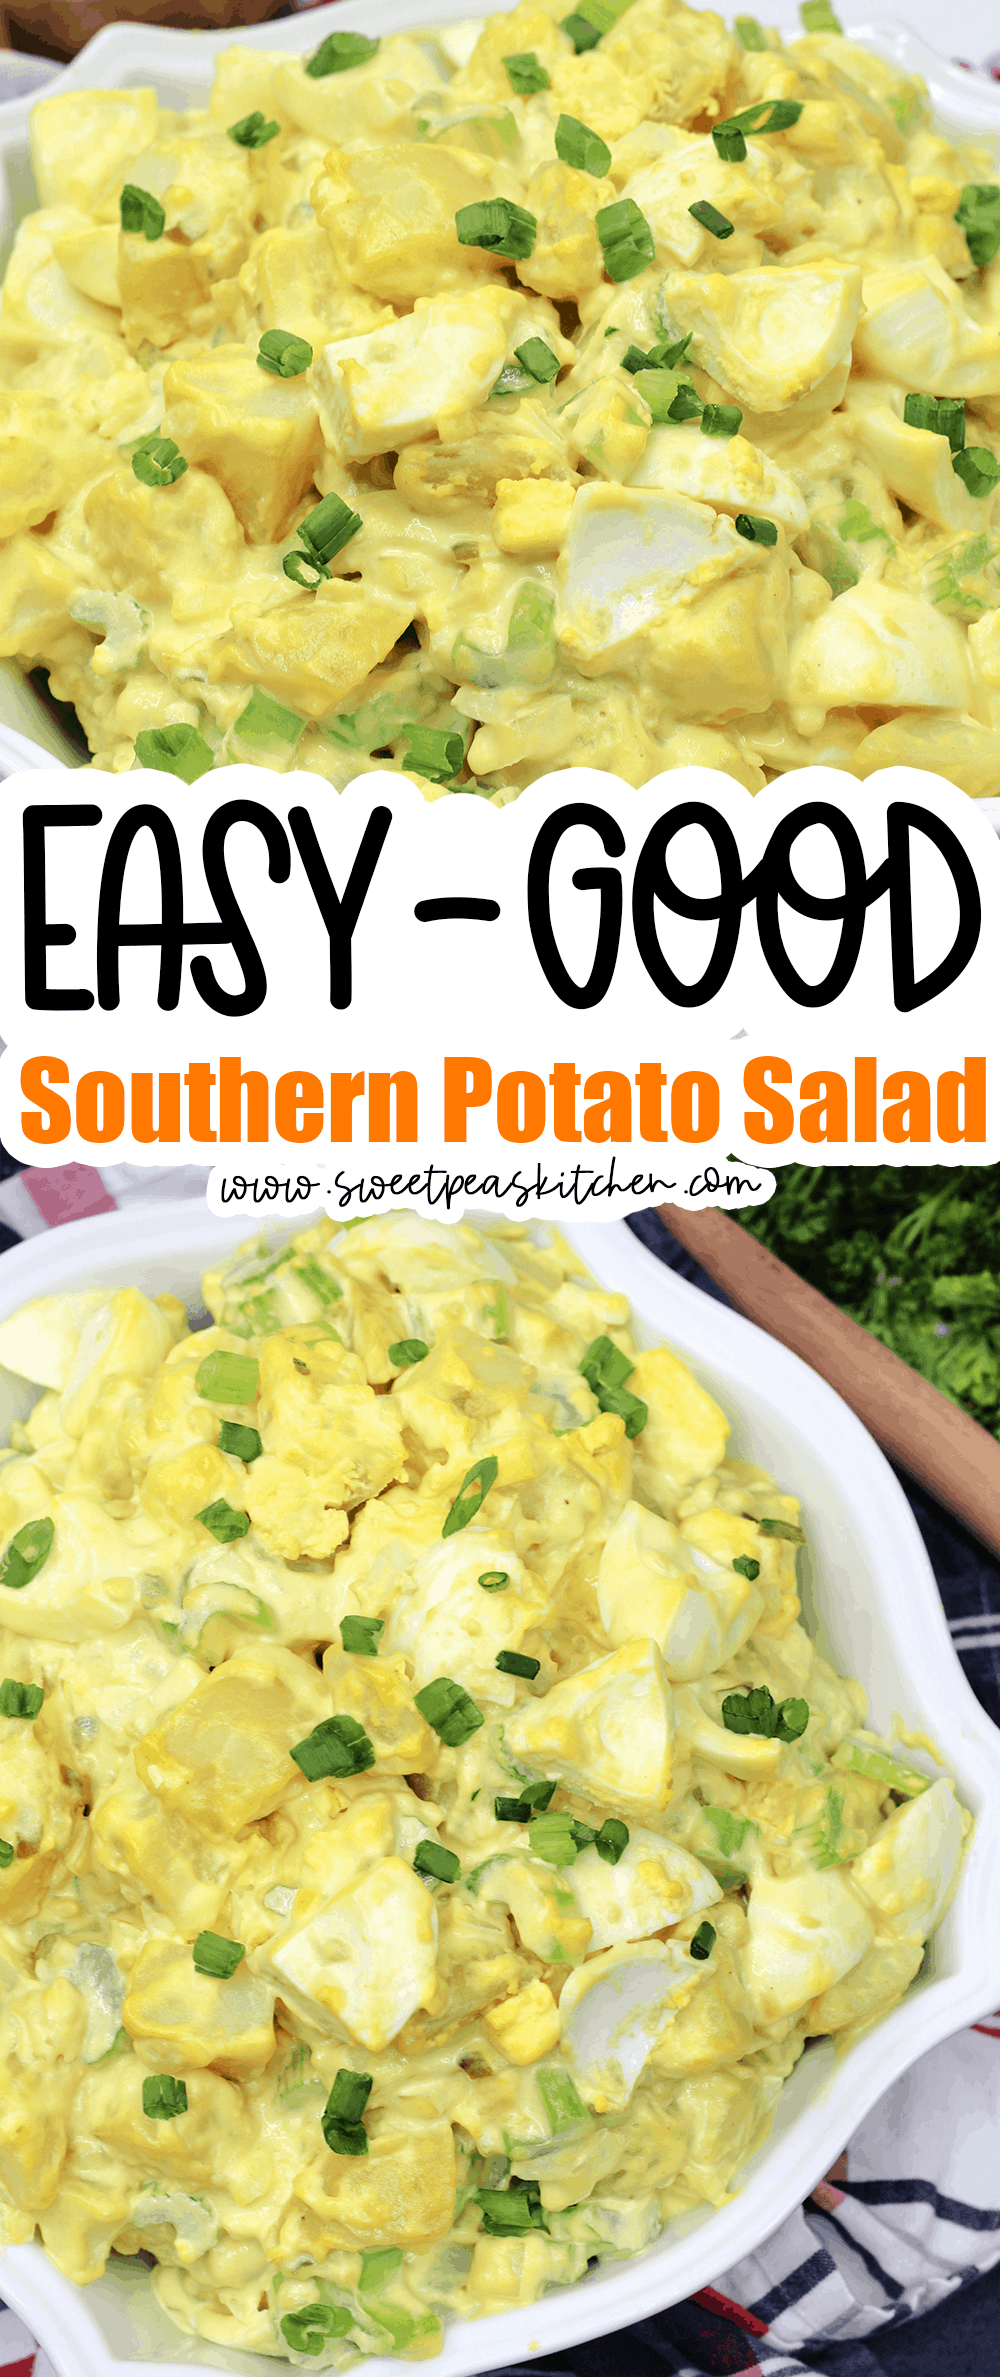 Southern Style Potato salad